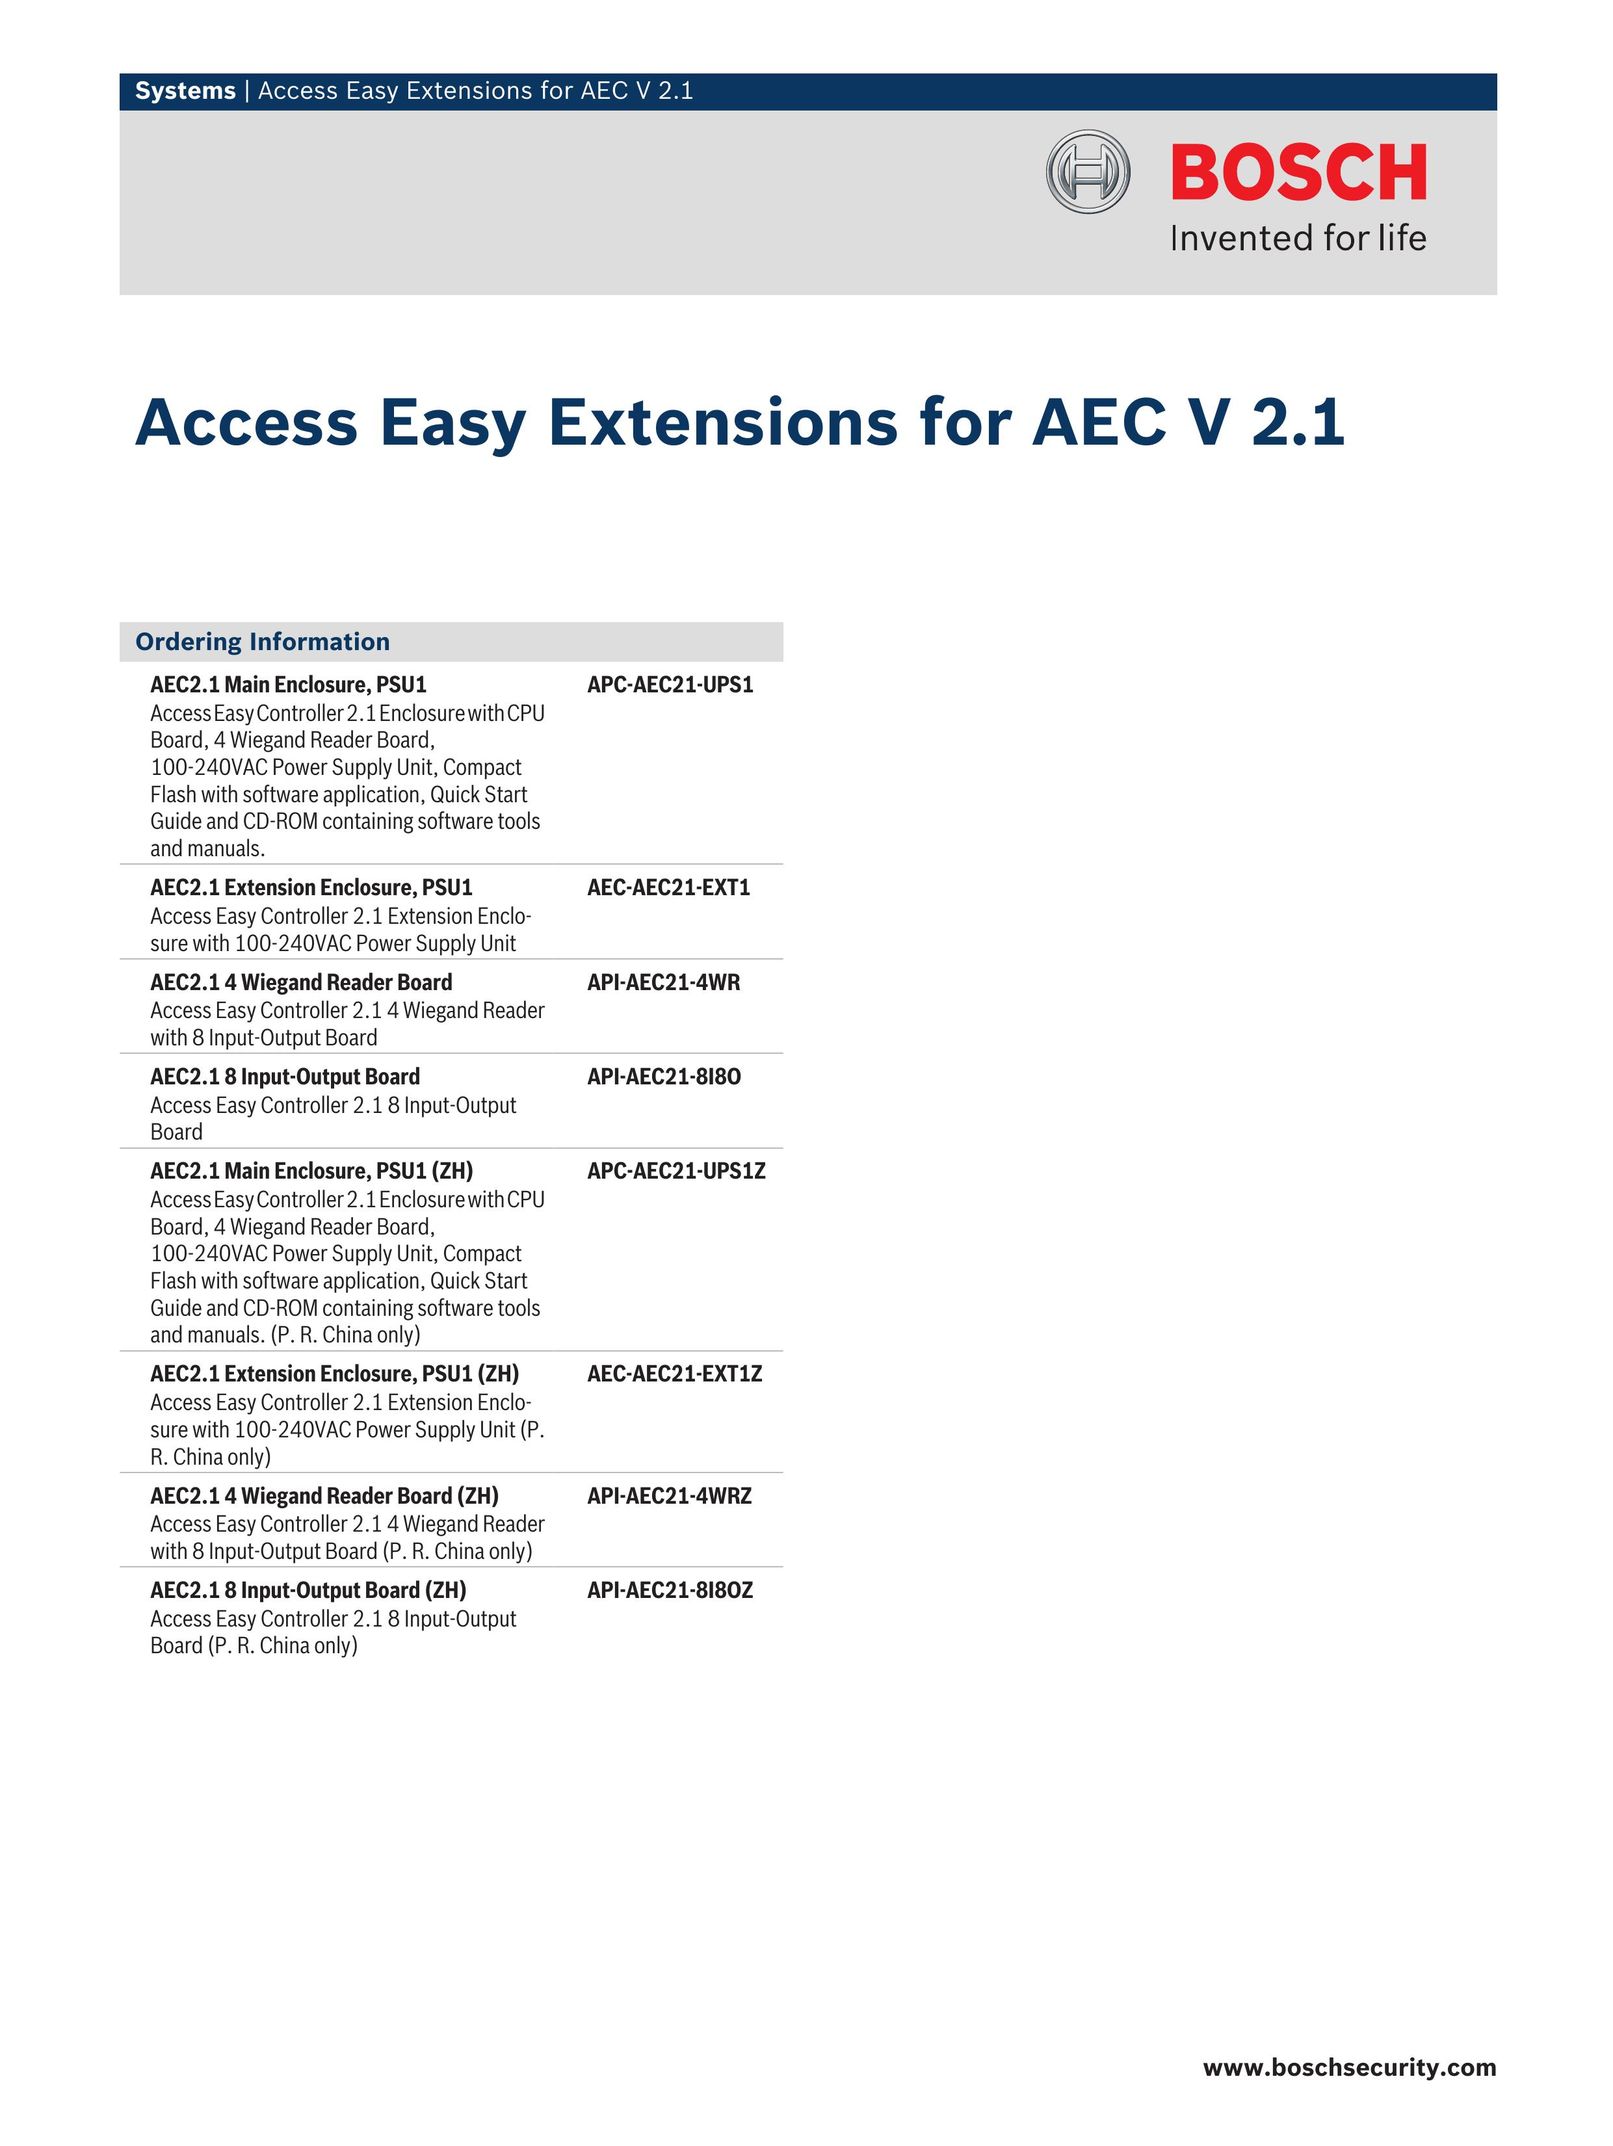 Bosch Appliances AEC-AEC21-EXT1Z Home Security System User Manual